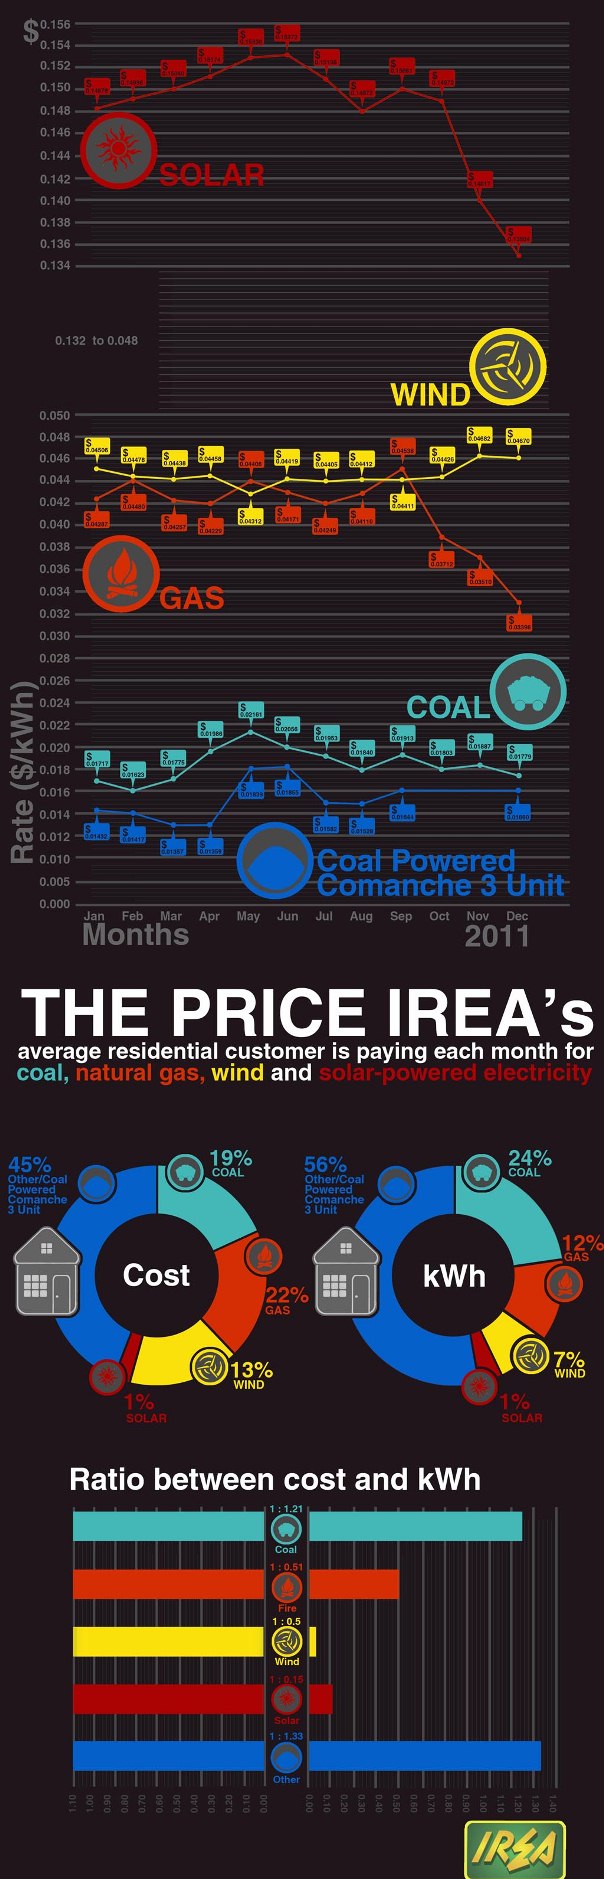 energy-rates-2011-infographic